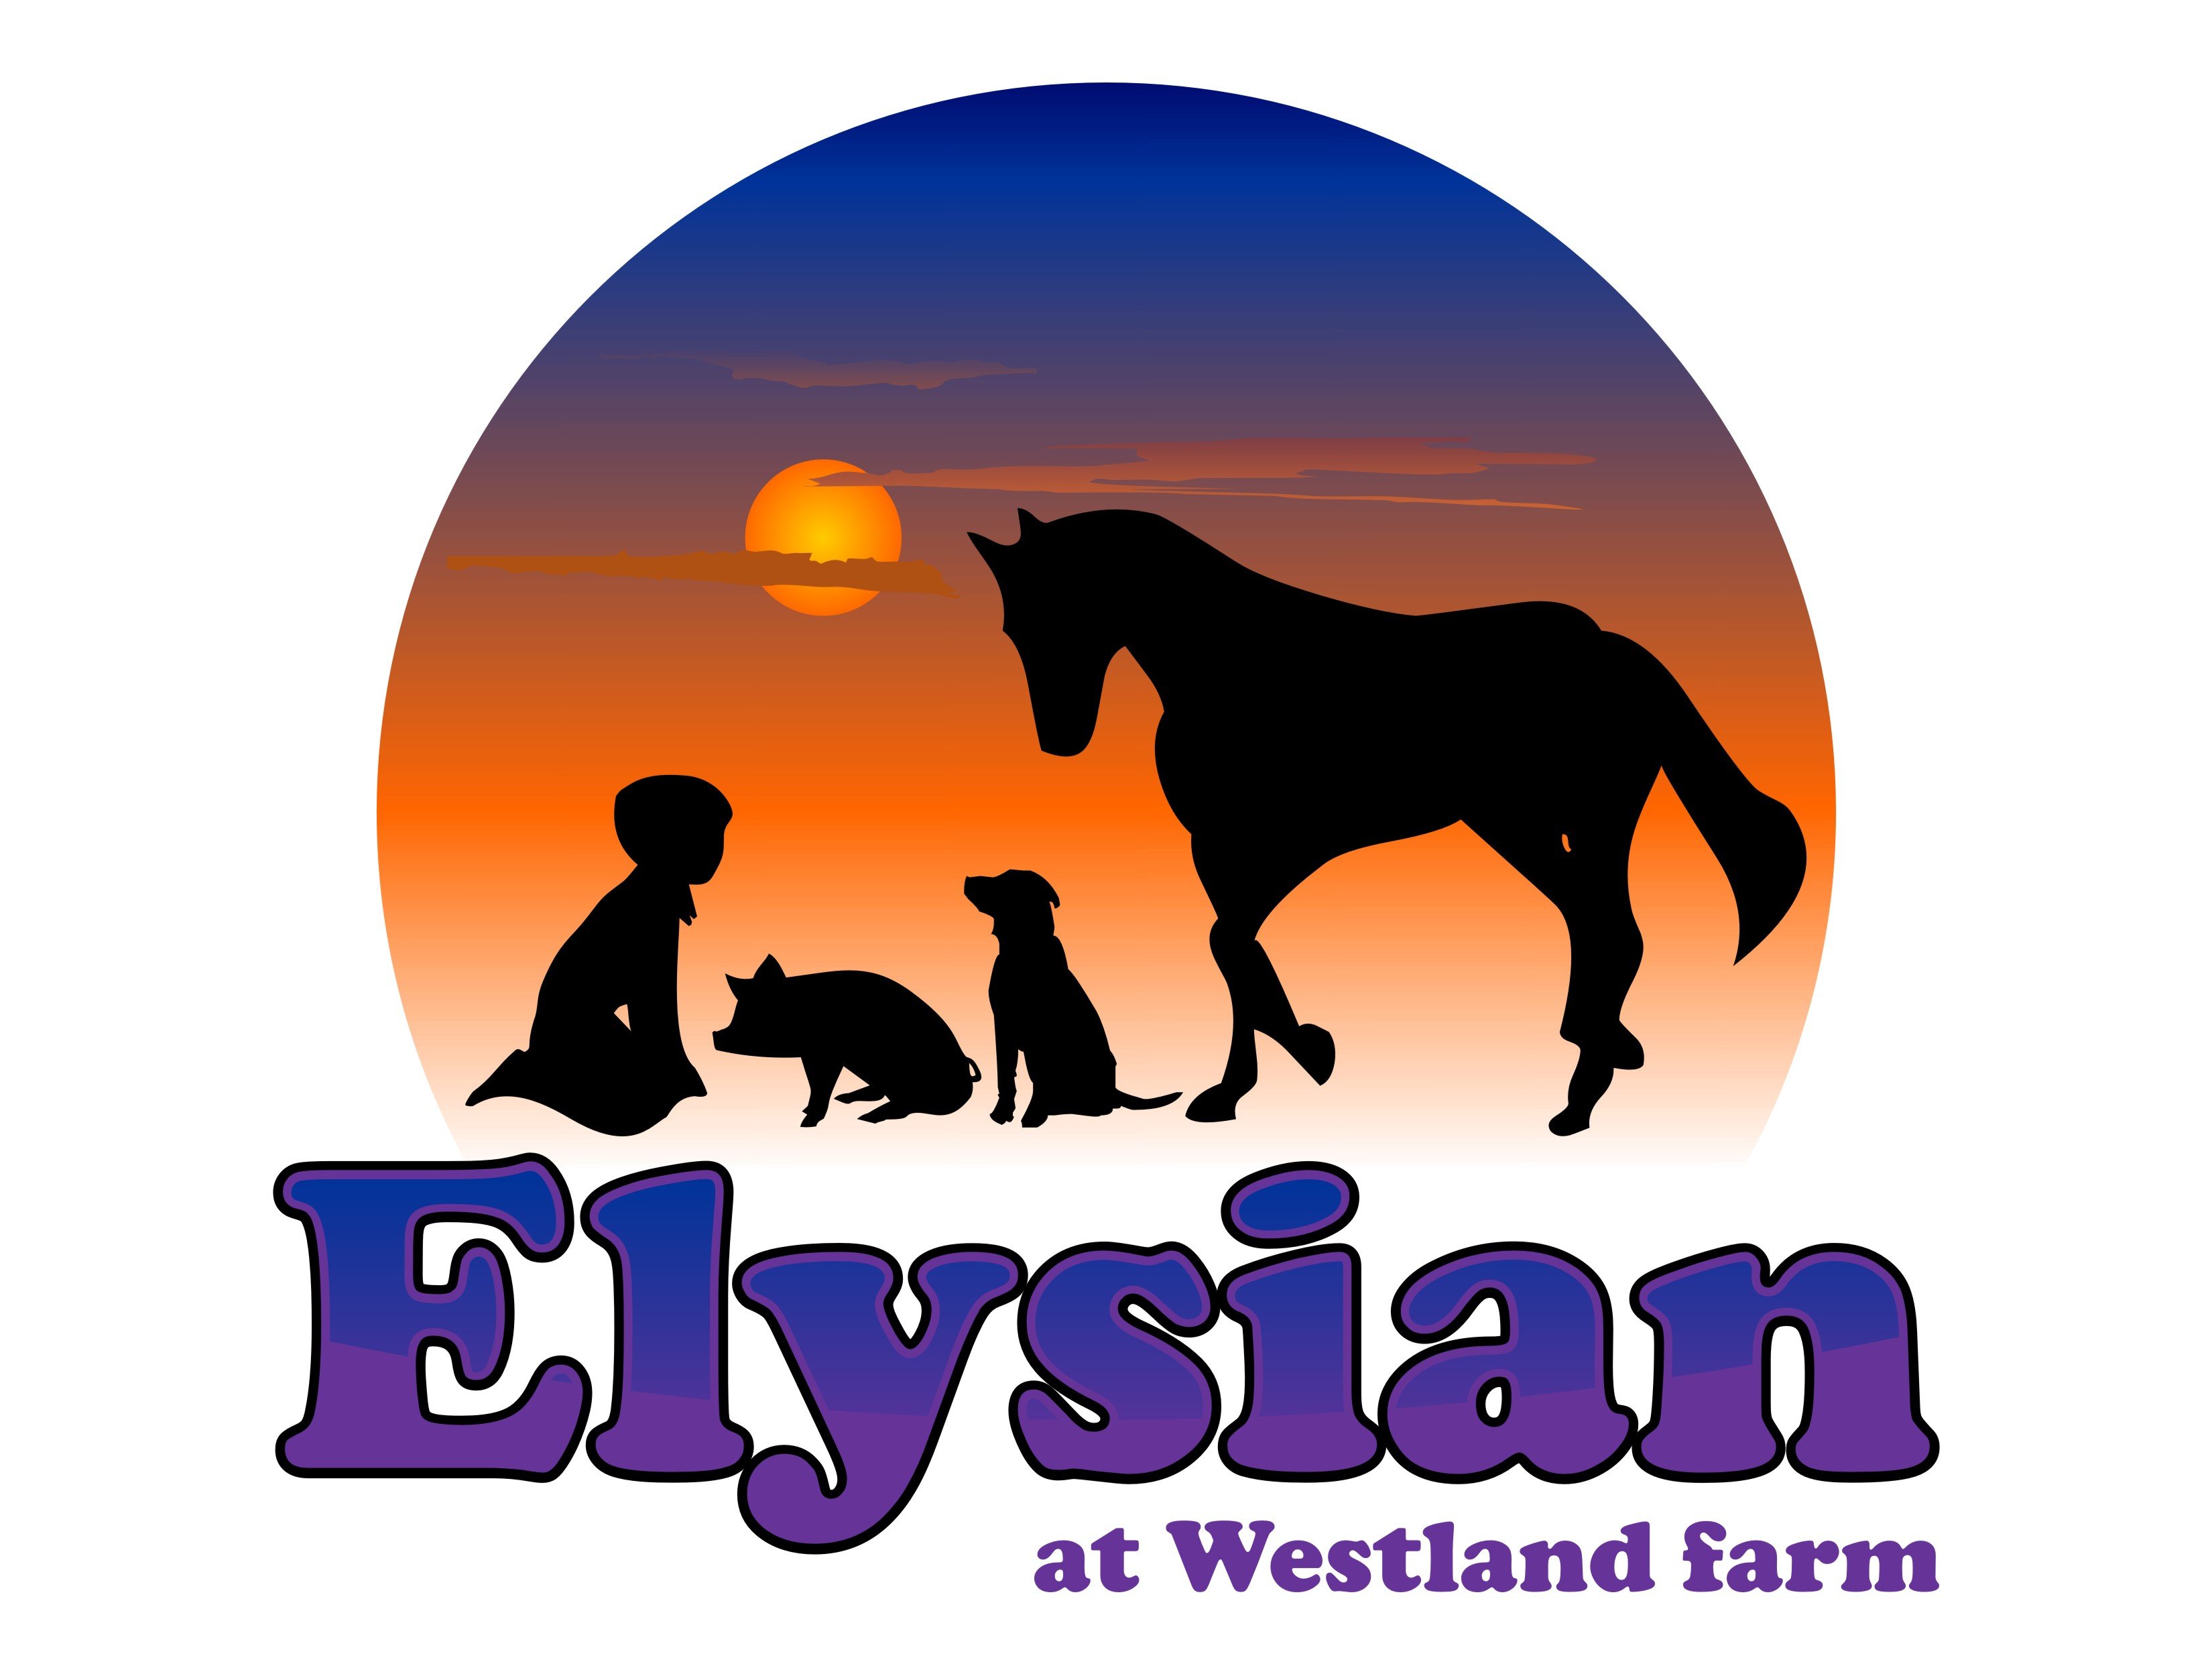 Elysian at Westland